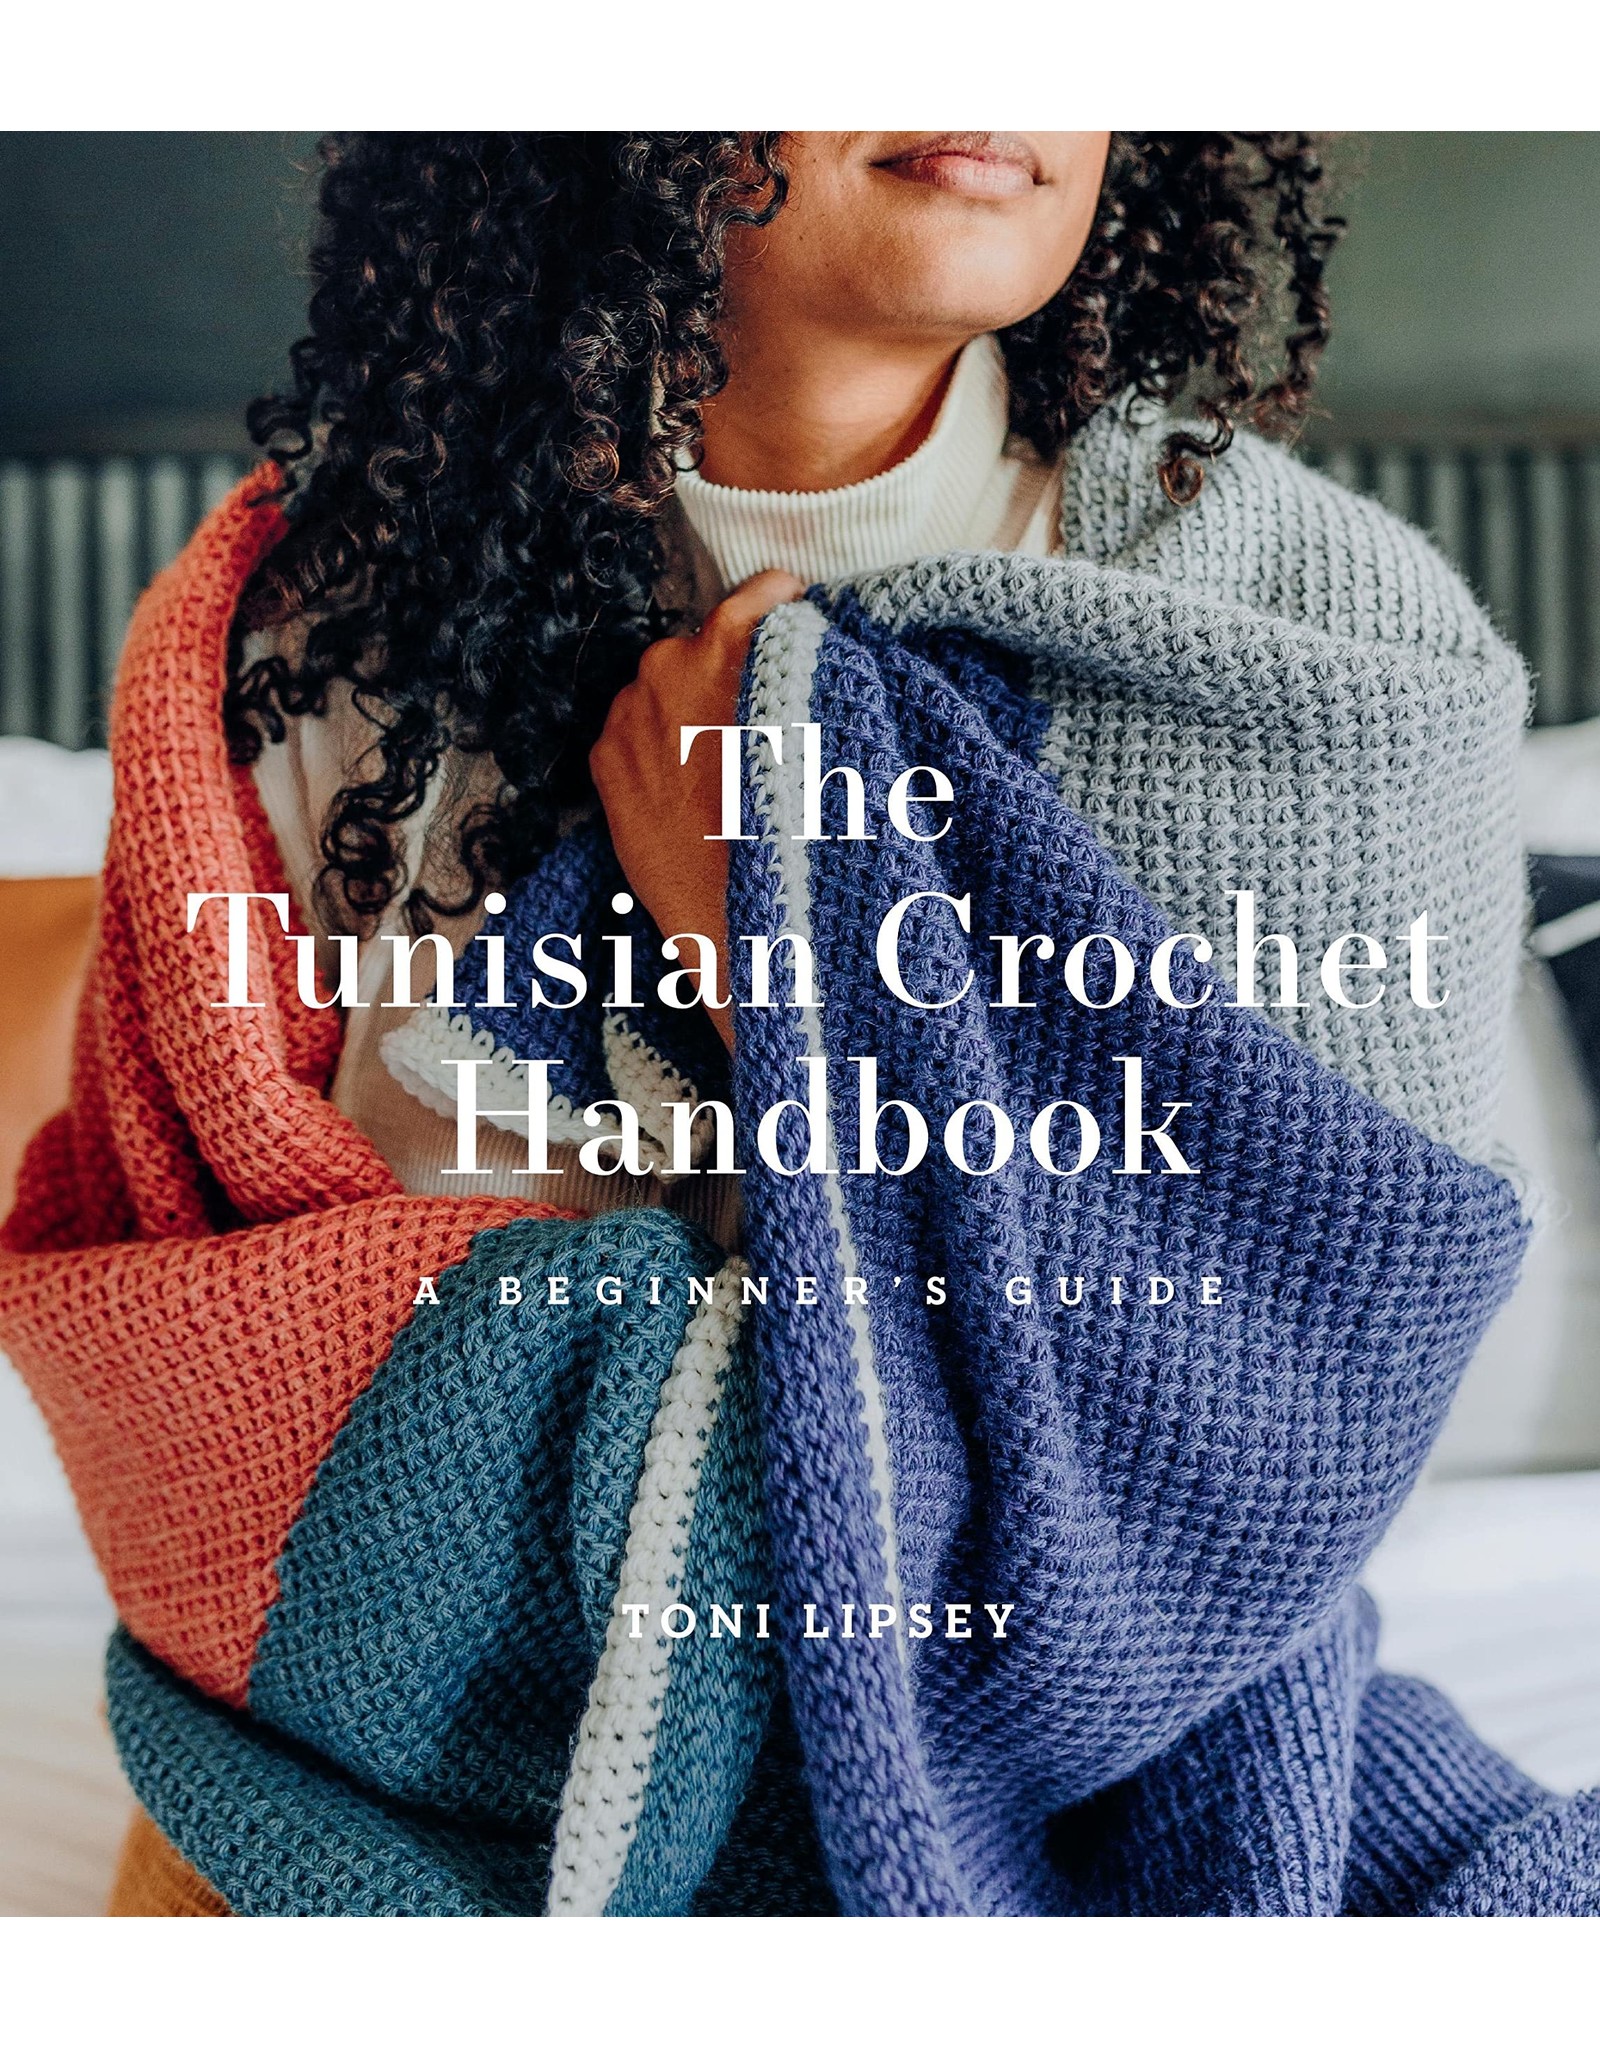 Toni Lipsey The Tunisian Crochet Handbook: A Beginner's Guide  by Toni Lipsey